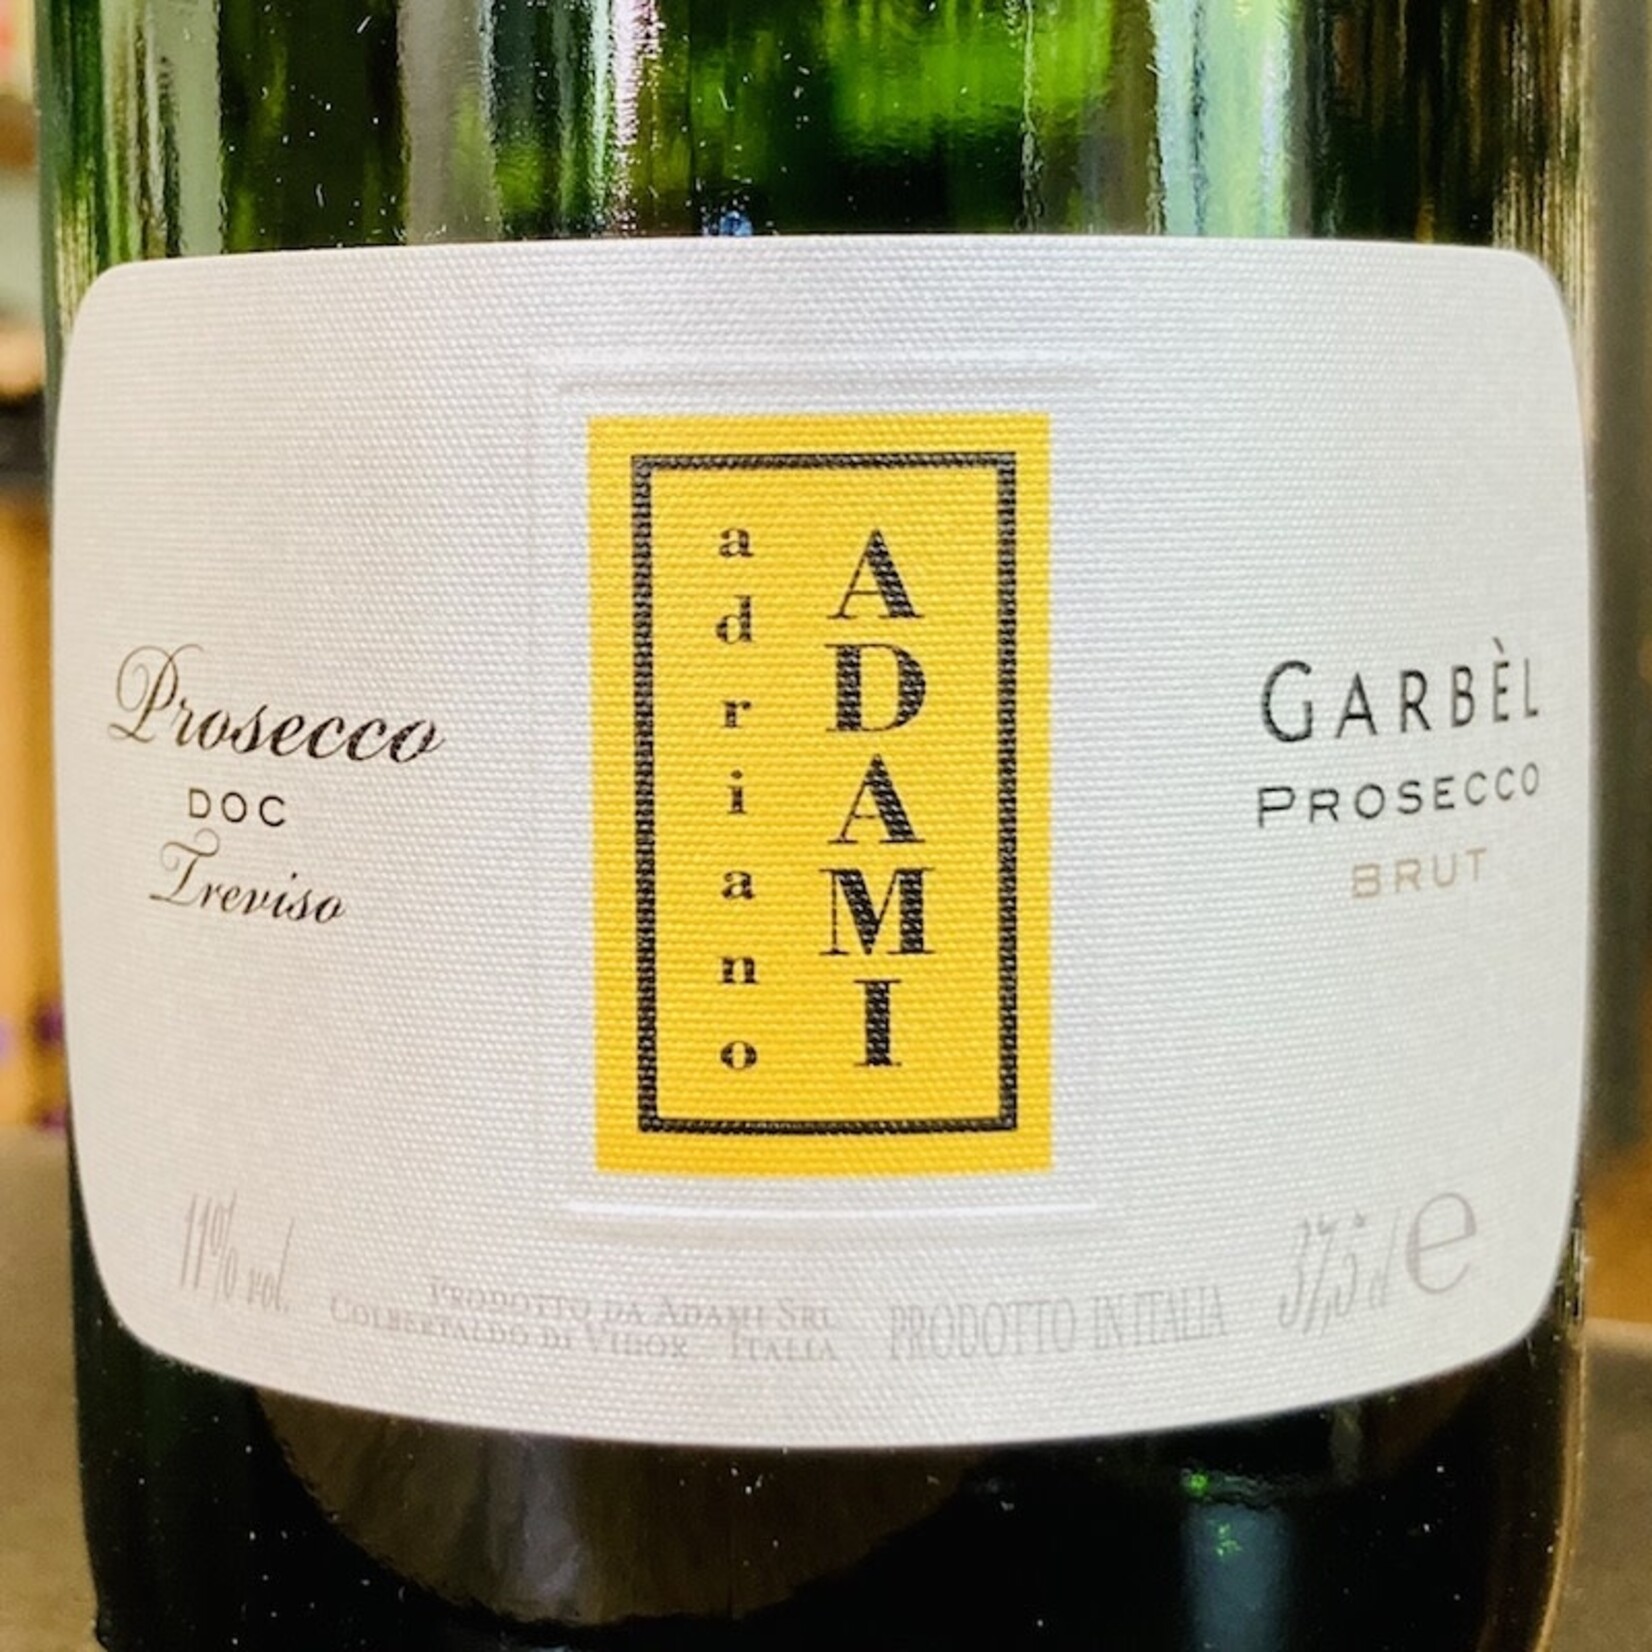 Italy Adami Prosecco Treviso "Garbel" 375ml